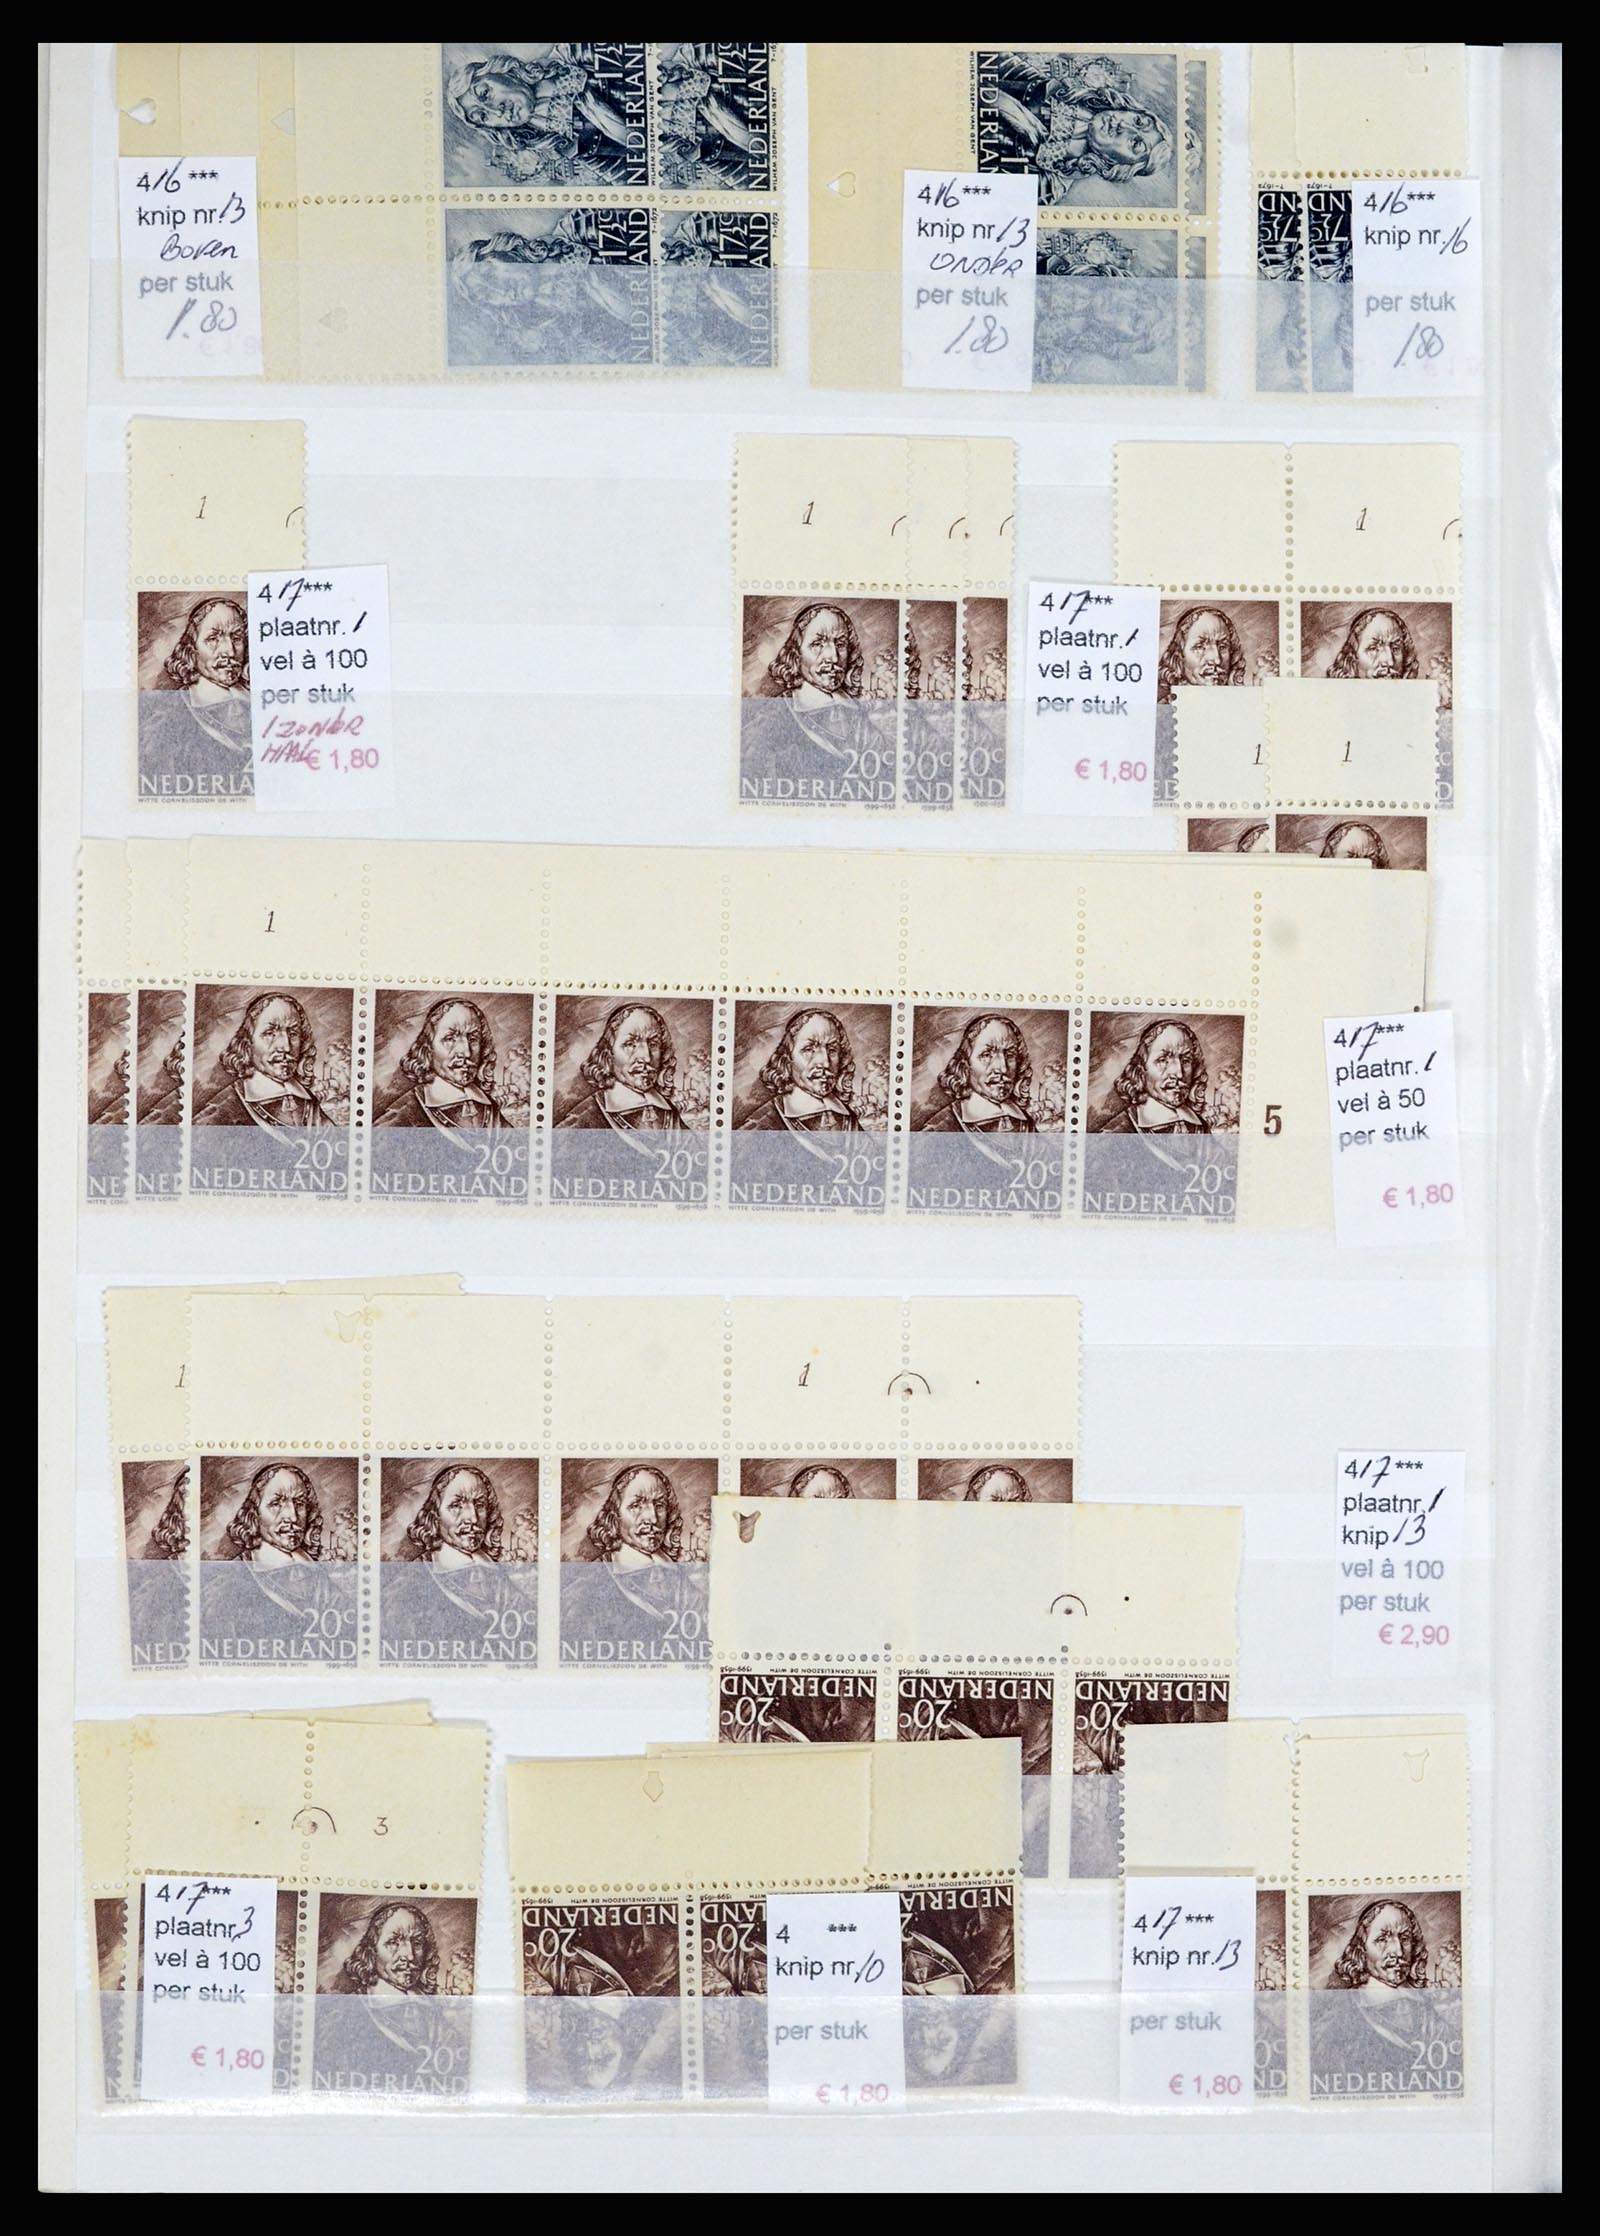 36838 040 - Stamp collection 36838 Netherlands sheet margin specialties 1906-1948.